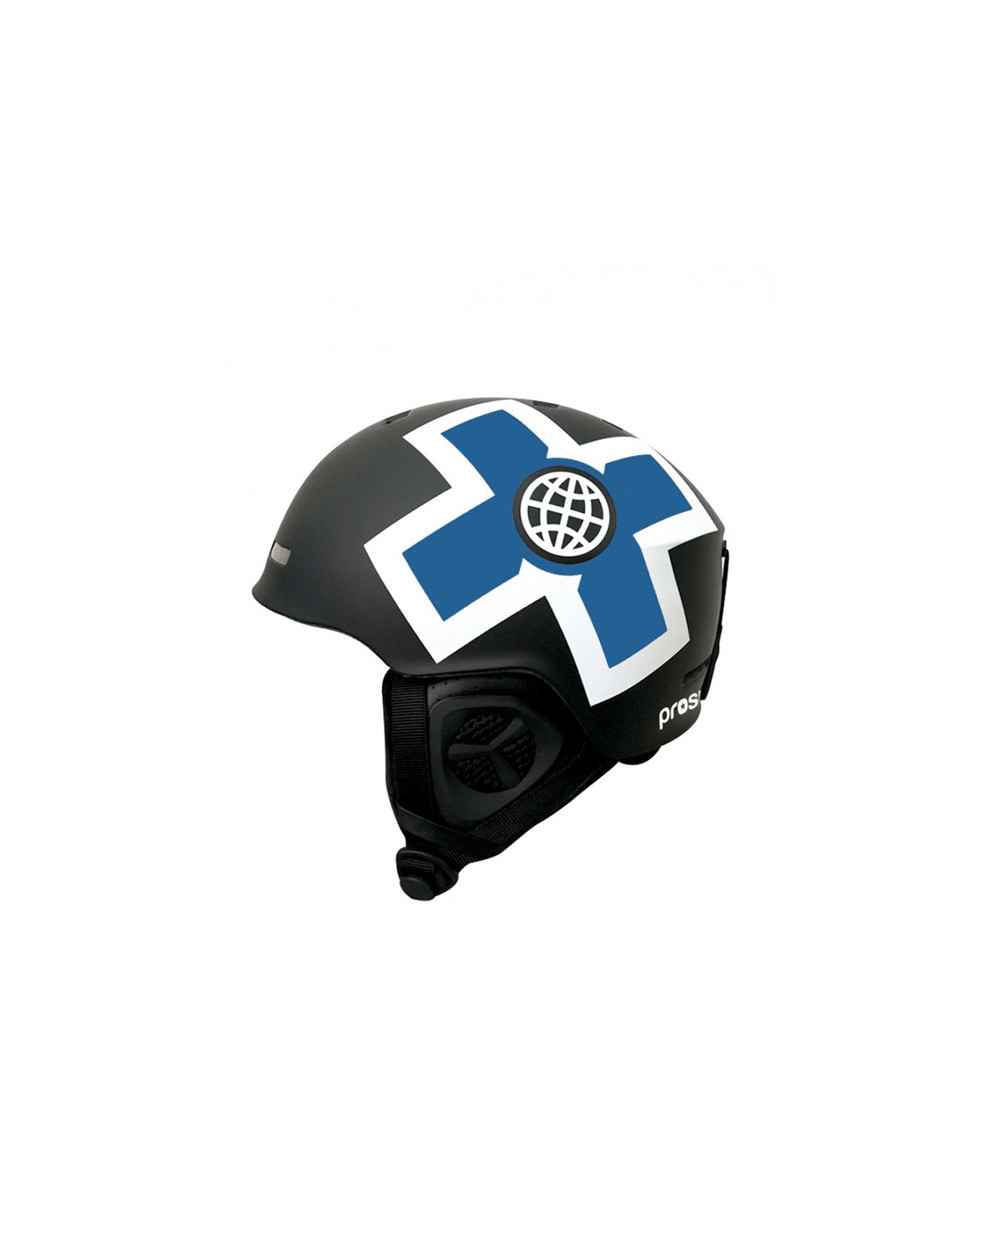 Prosurf X Games Black/Blue - Snowboard Helmet